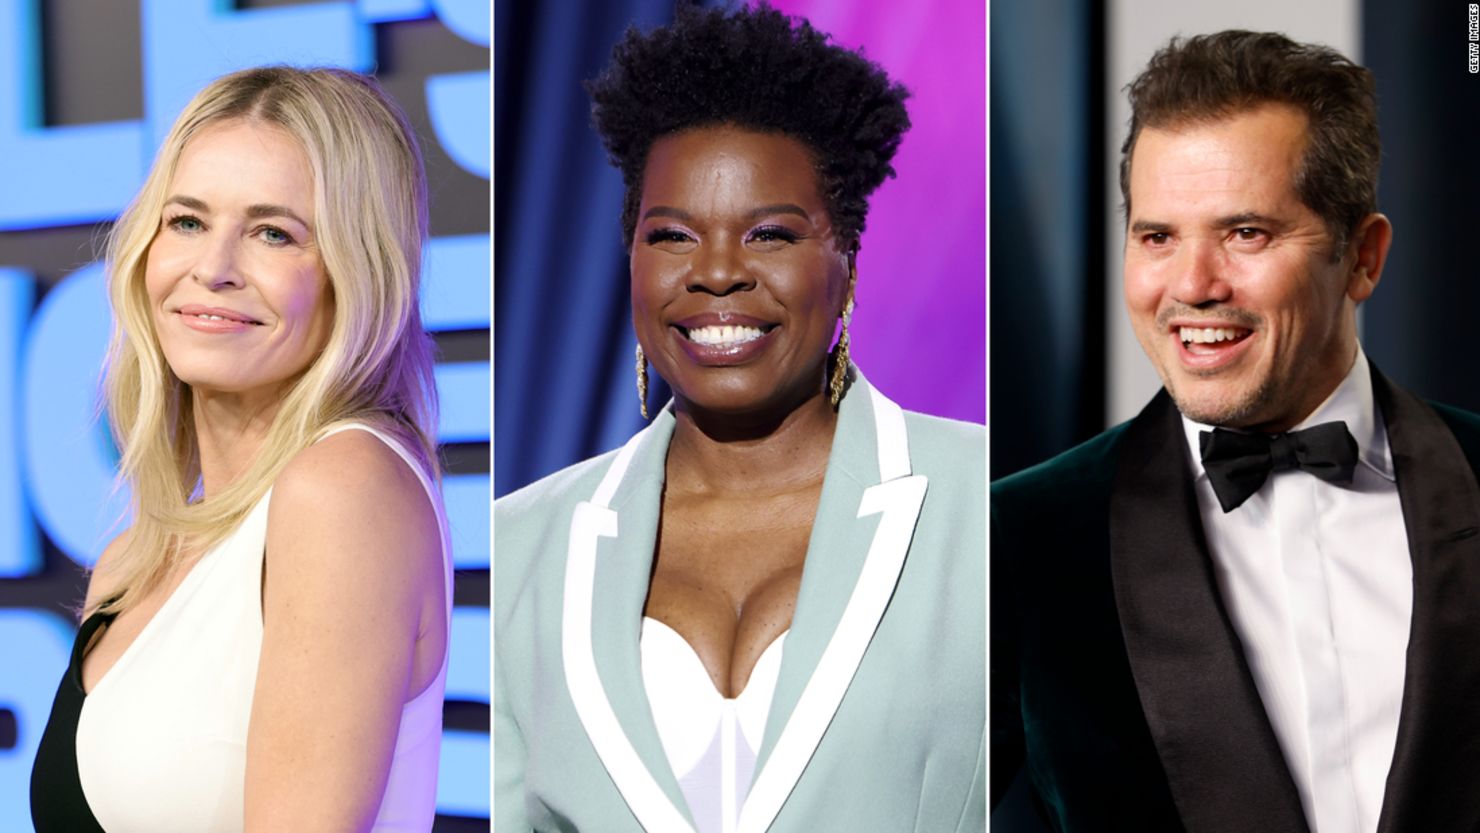 Chelsea Handler, Leslie Jones and John Leguizamo will guest host "The Daily Show."